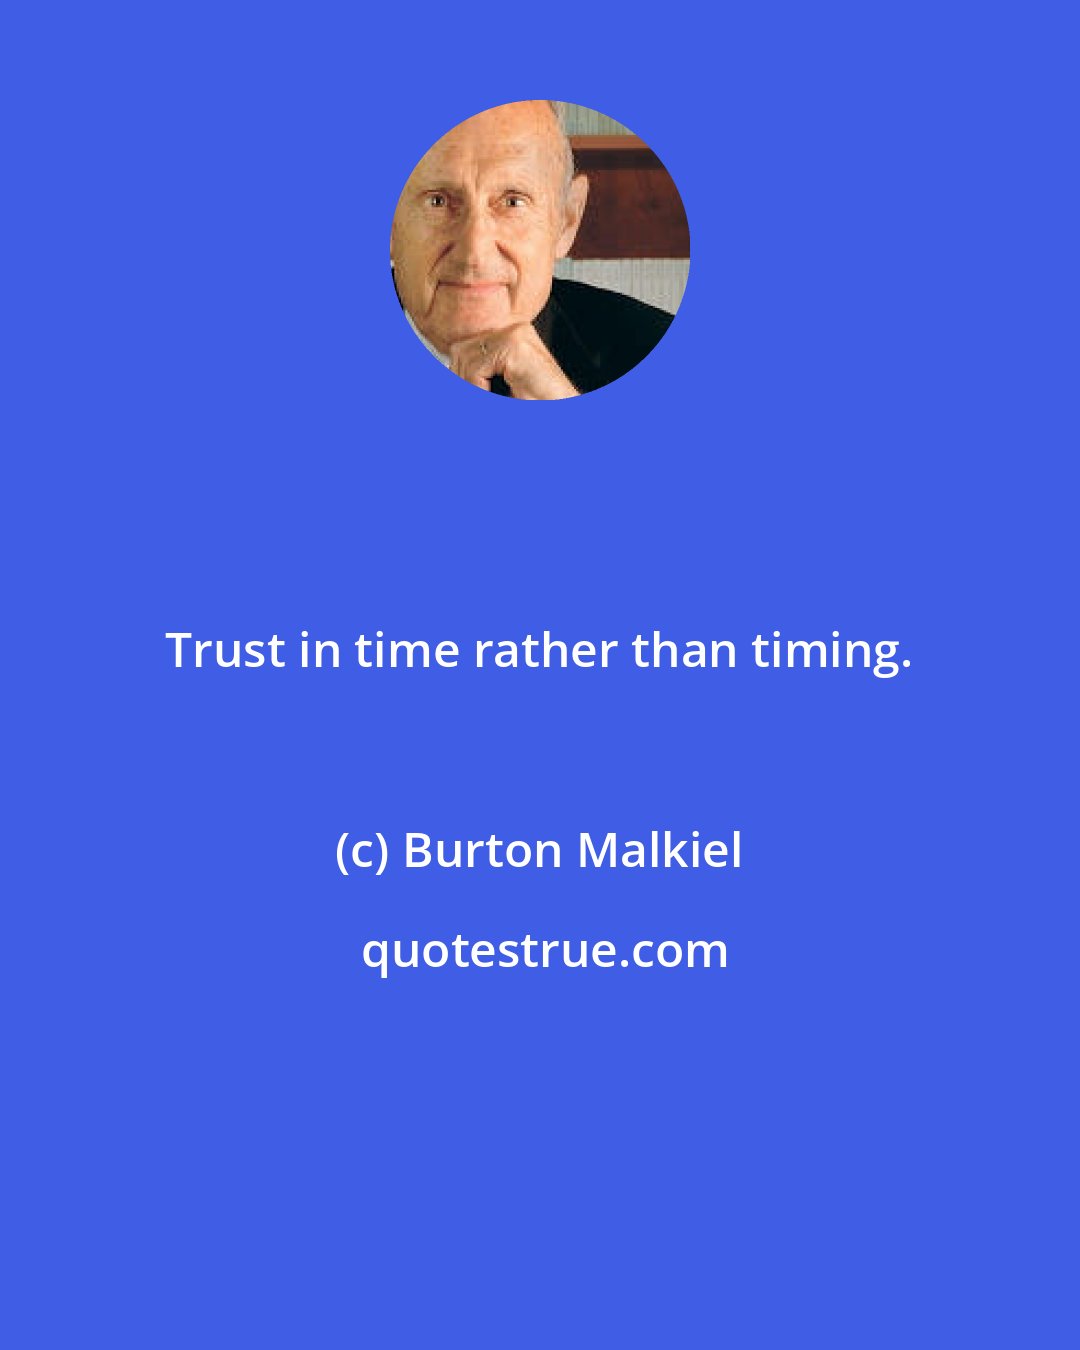 Burton Malkiel: Trust in time rather than timing.